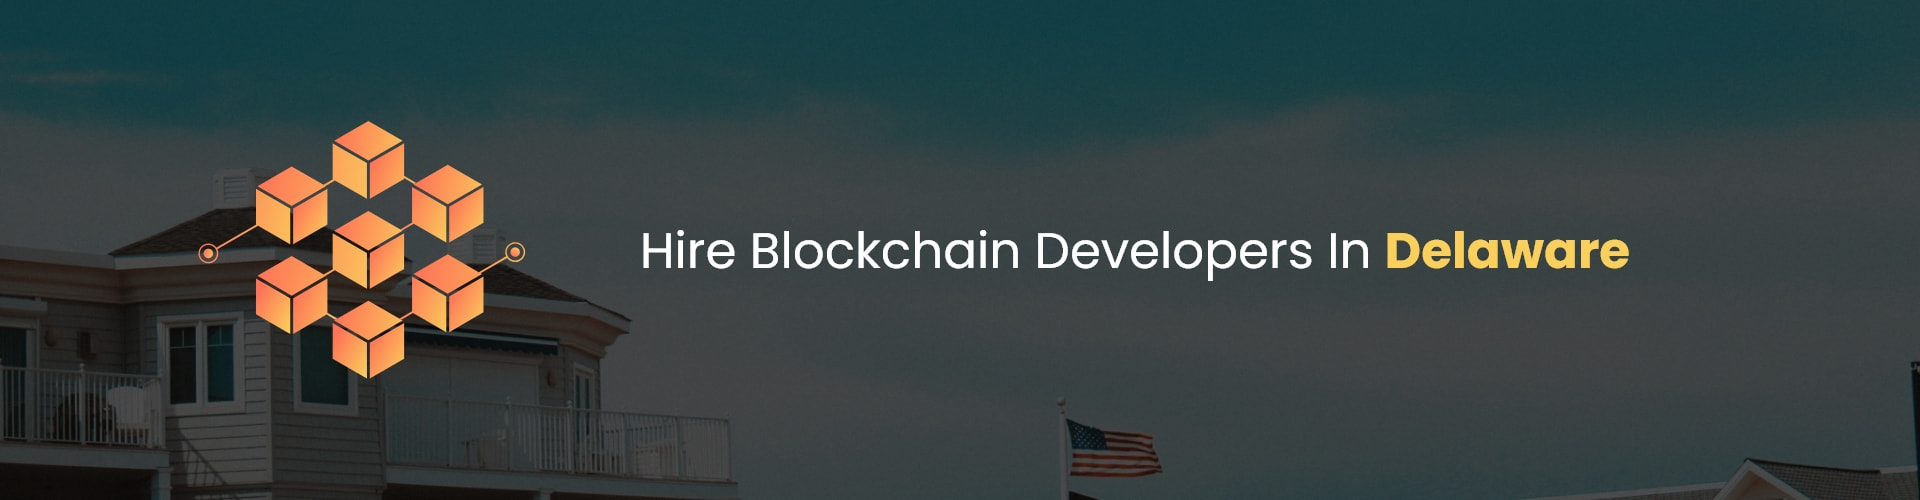 hire blockchain developers in delaware